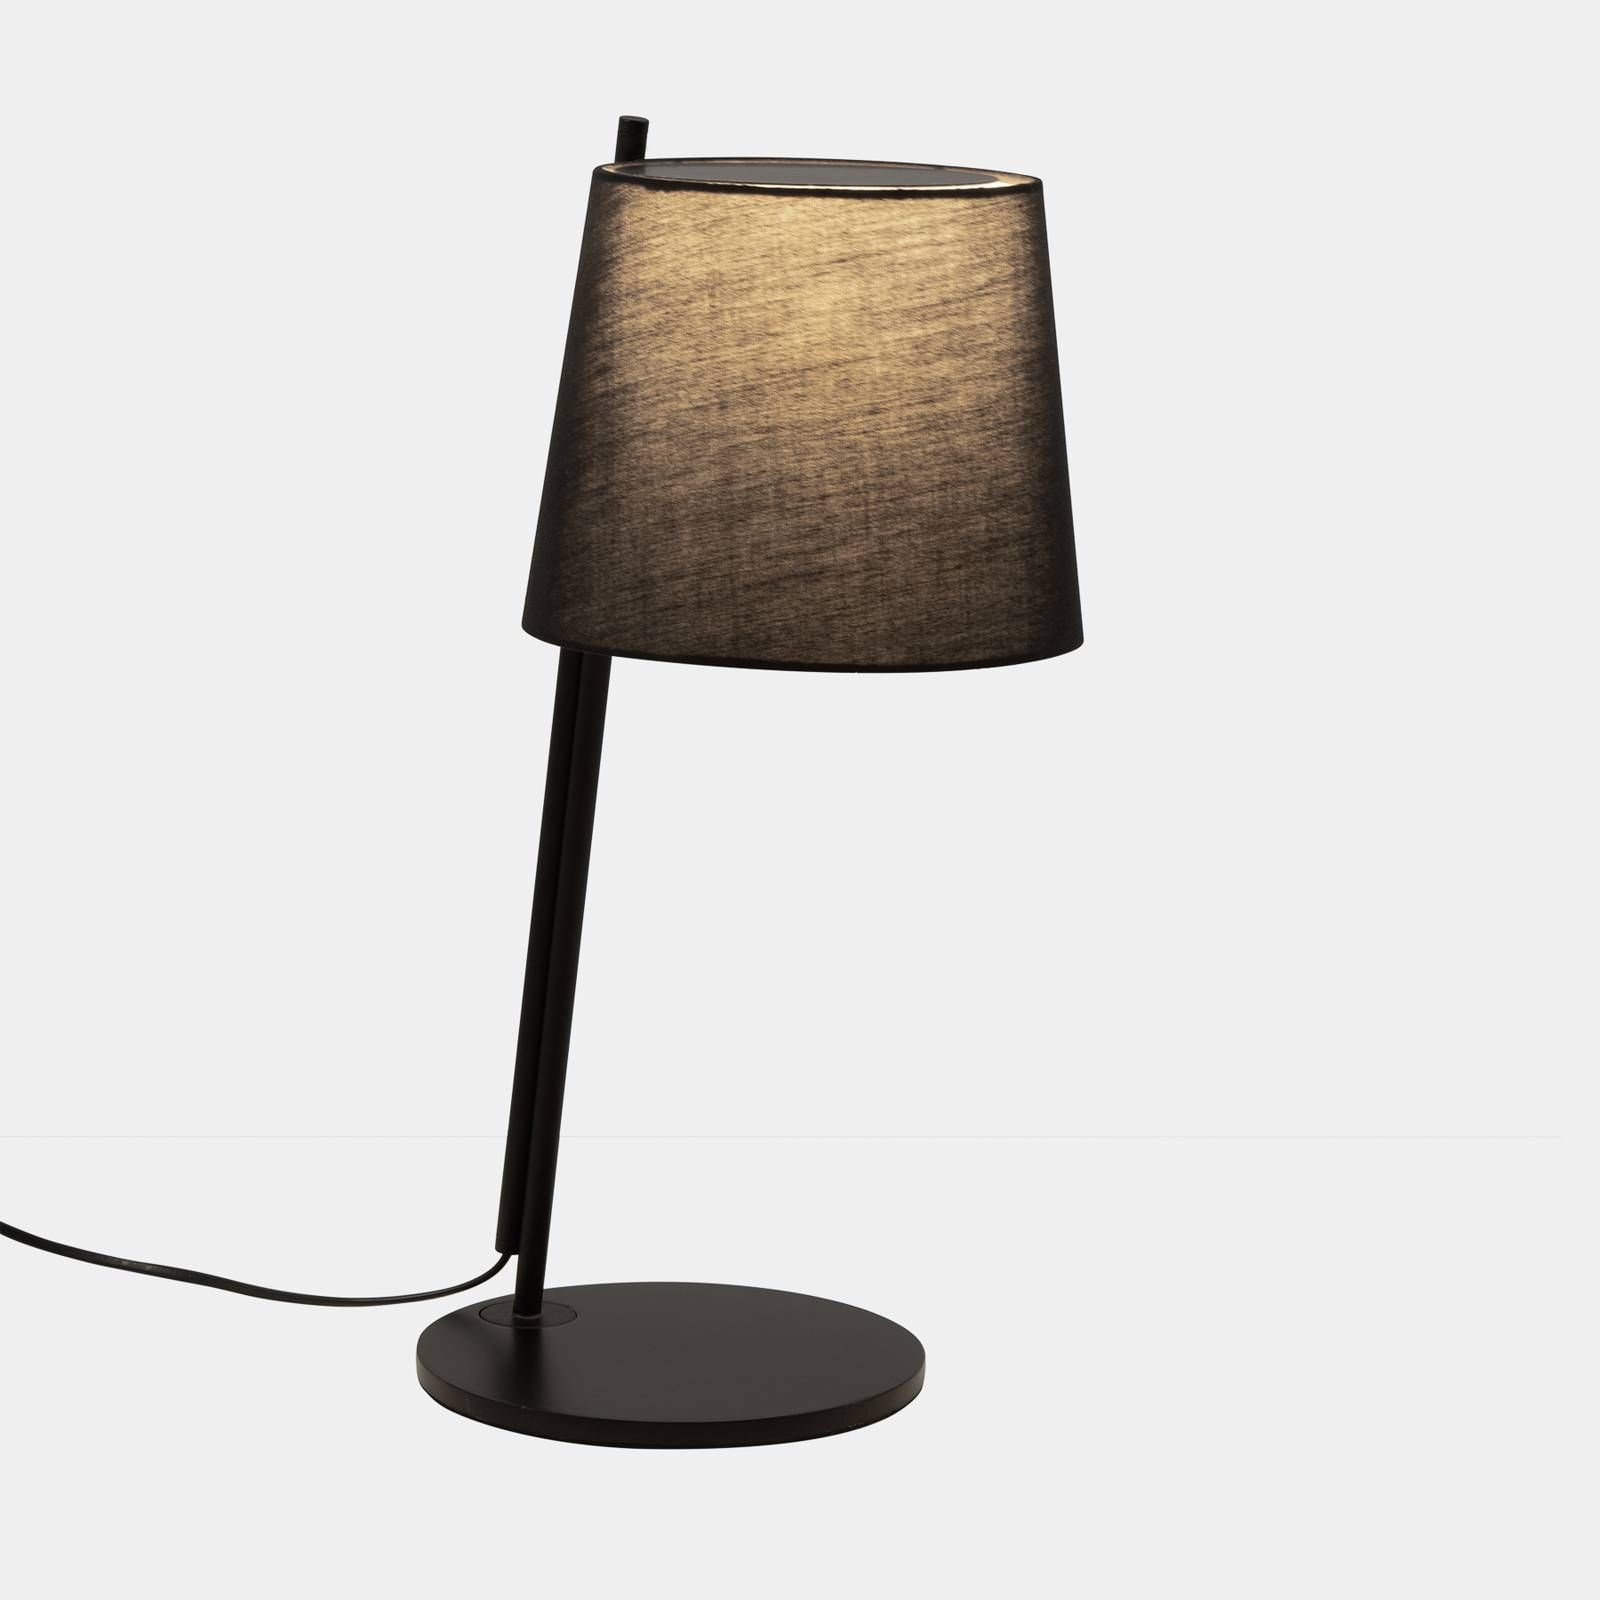 LEDS-C4 Clip stolová lampa 49 cm tienidlo čierna, Obývacia izba / jedáleň, oceľ, textil, E27, 15W, K: 49cm